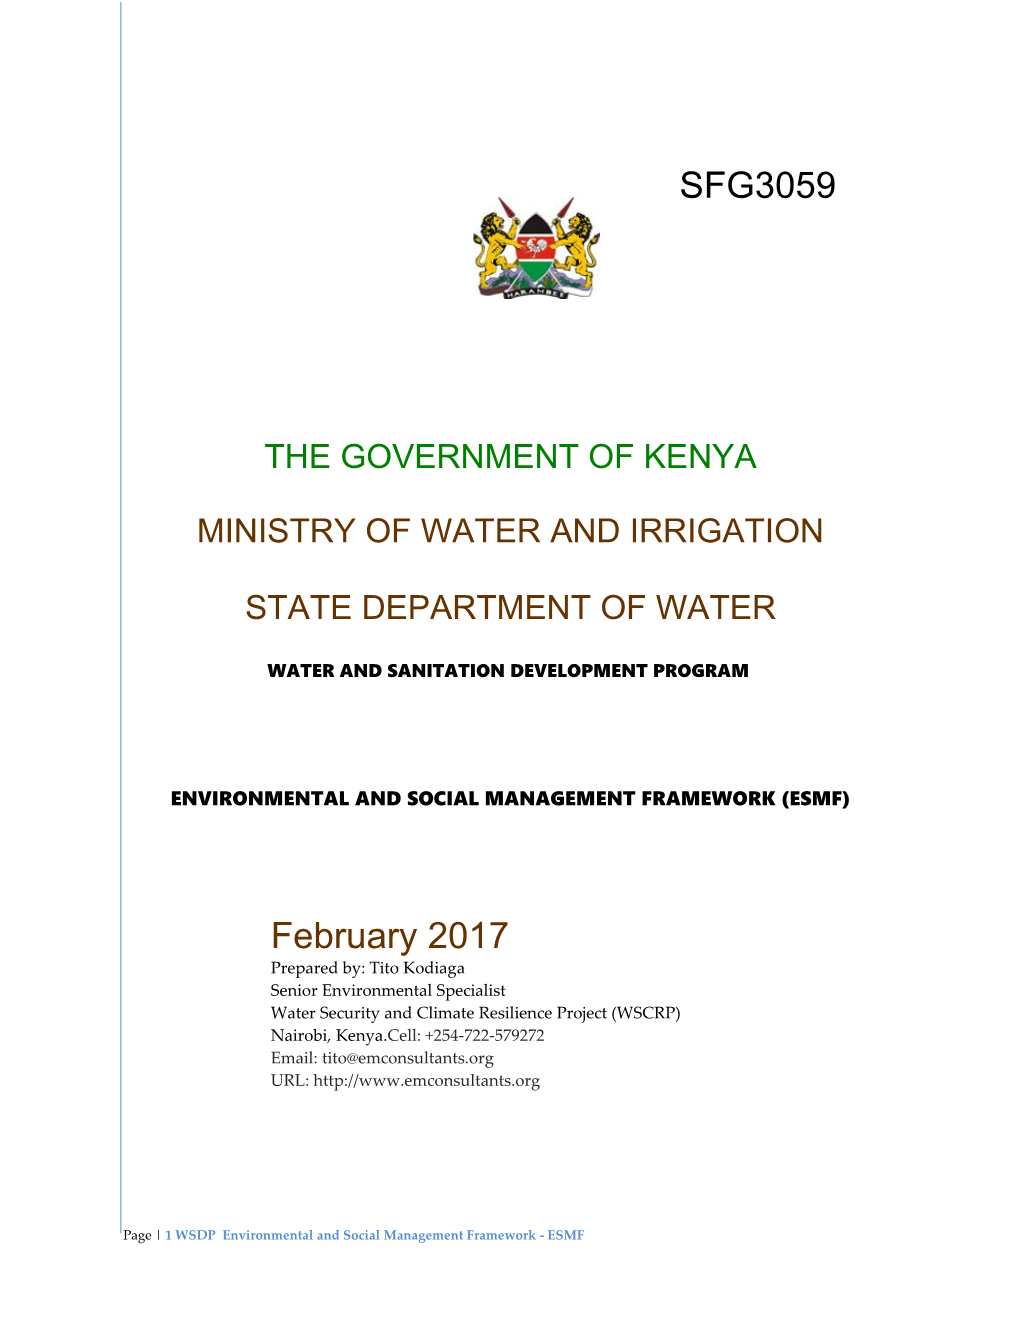 Water and Sanitation Development Program